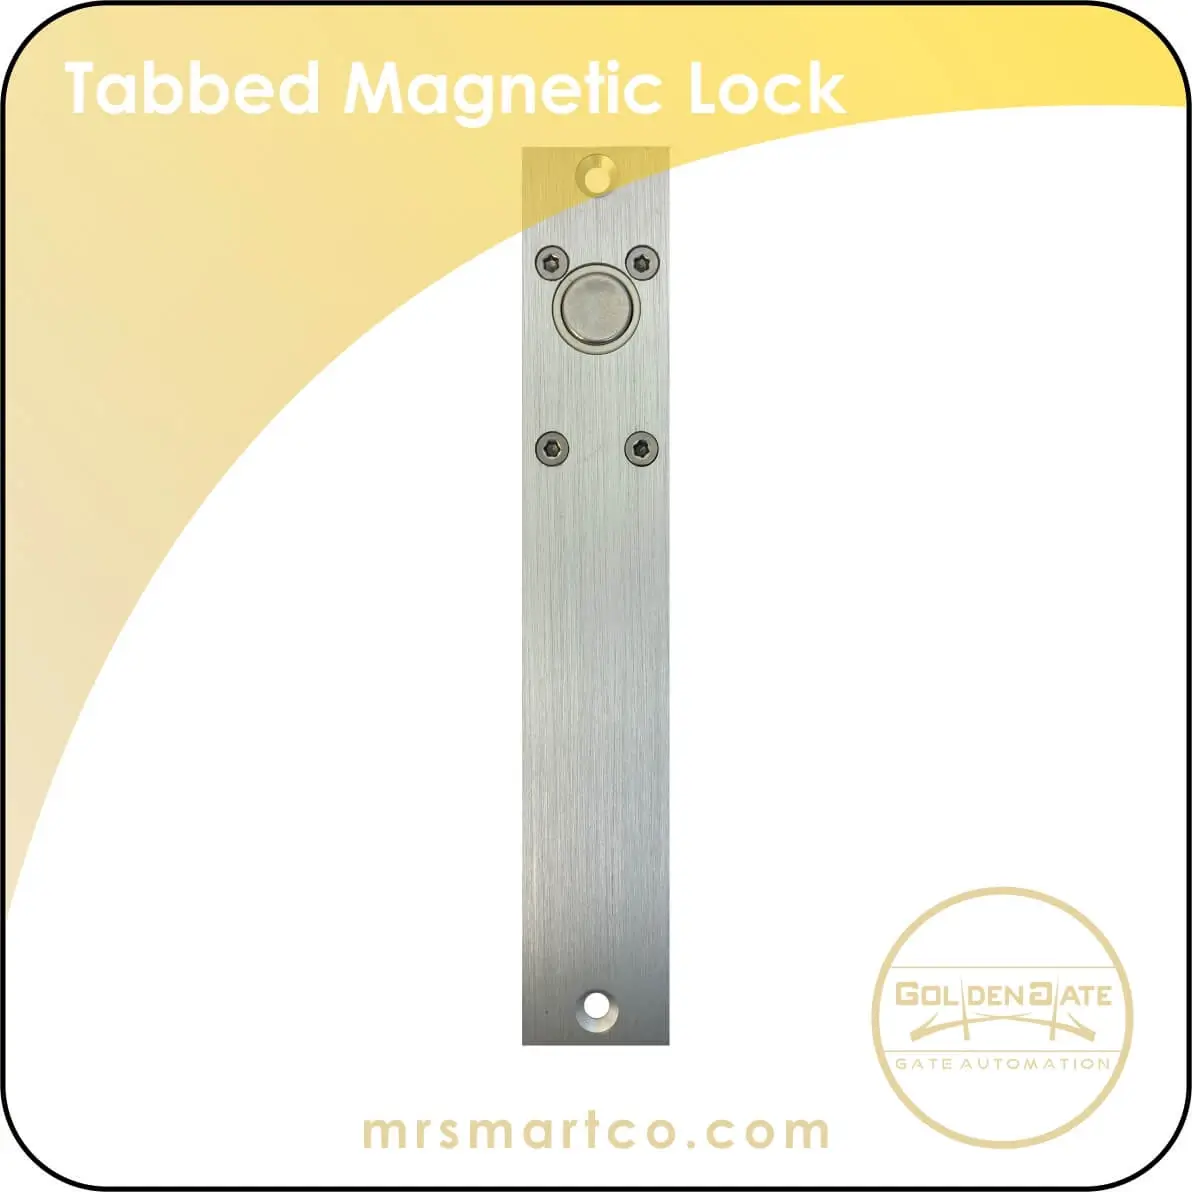 Tabbed magnetic lock